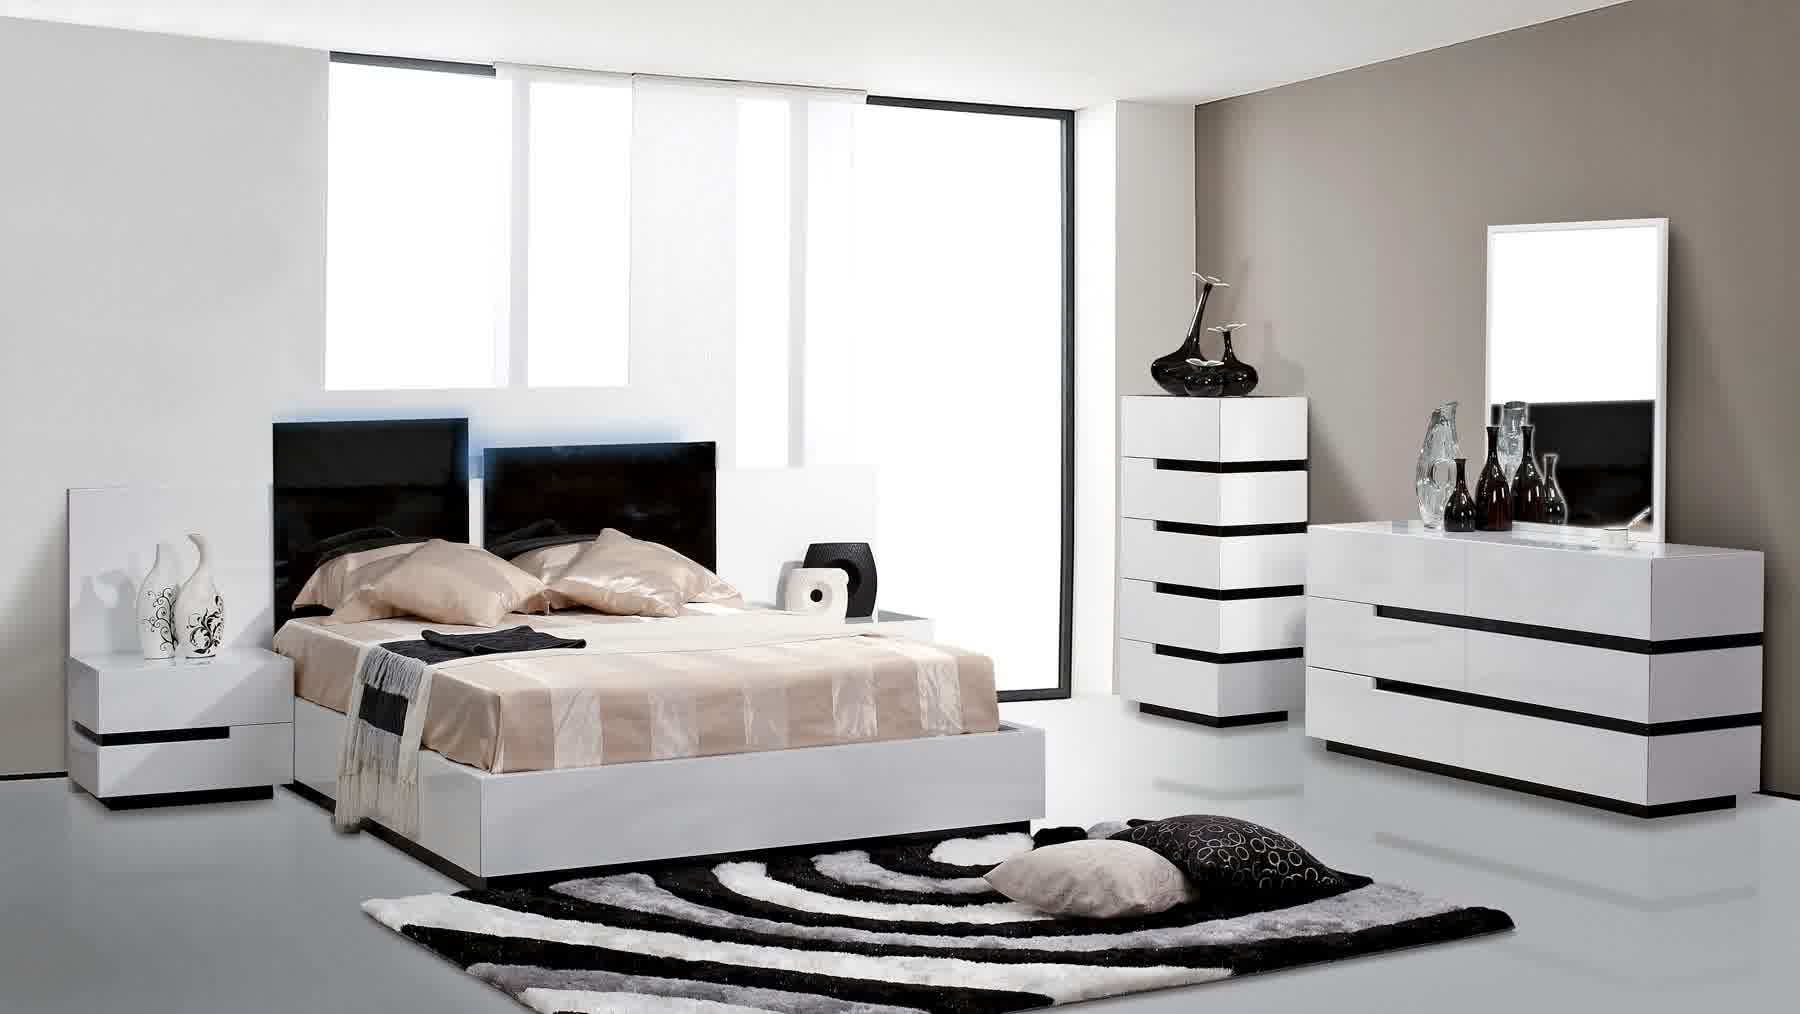 غرف نوم فريدة مودرن أبيض 2015 Baitidesain